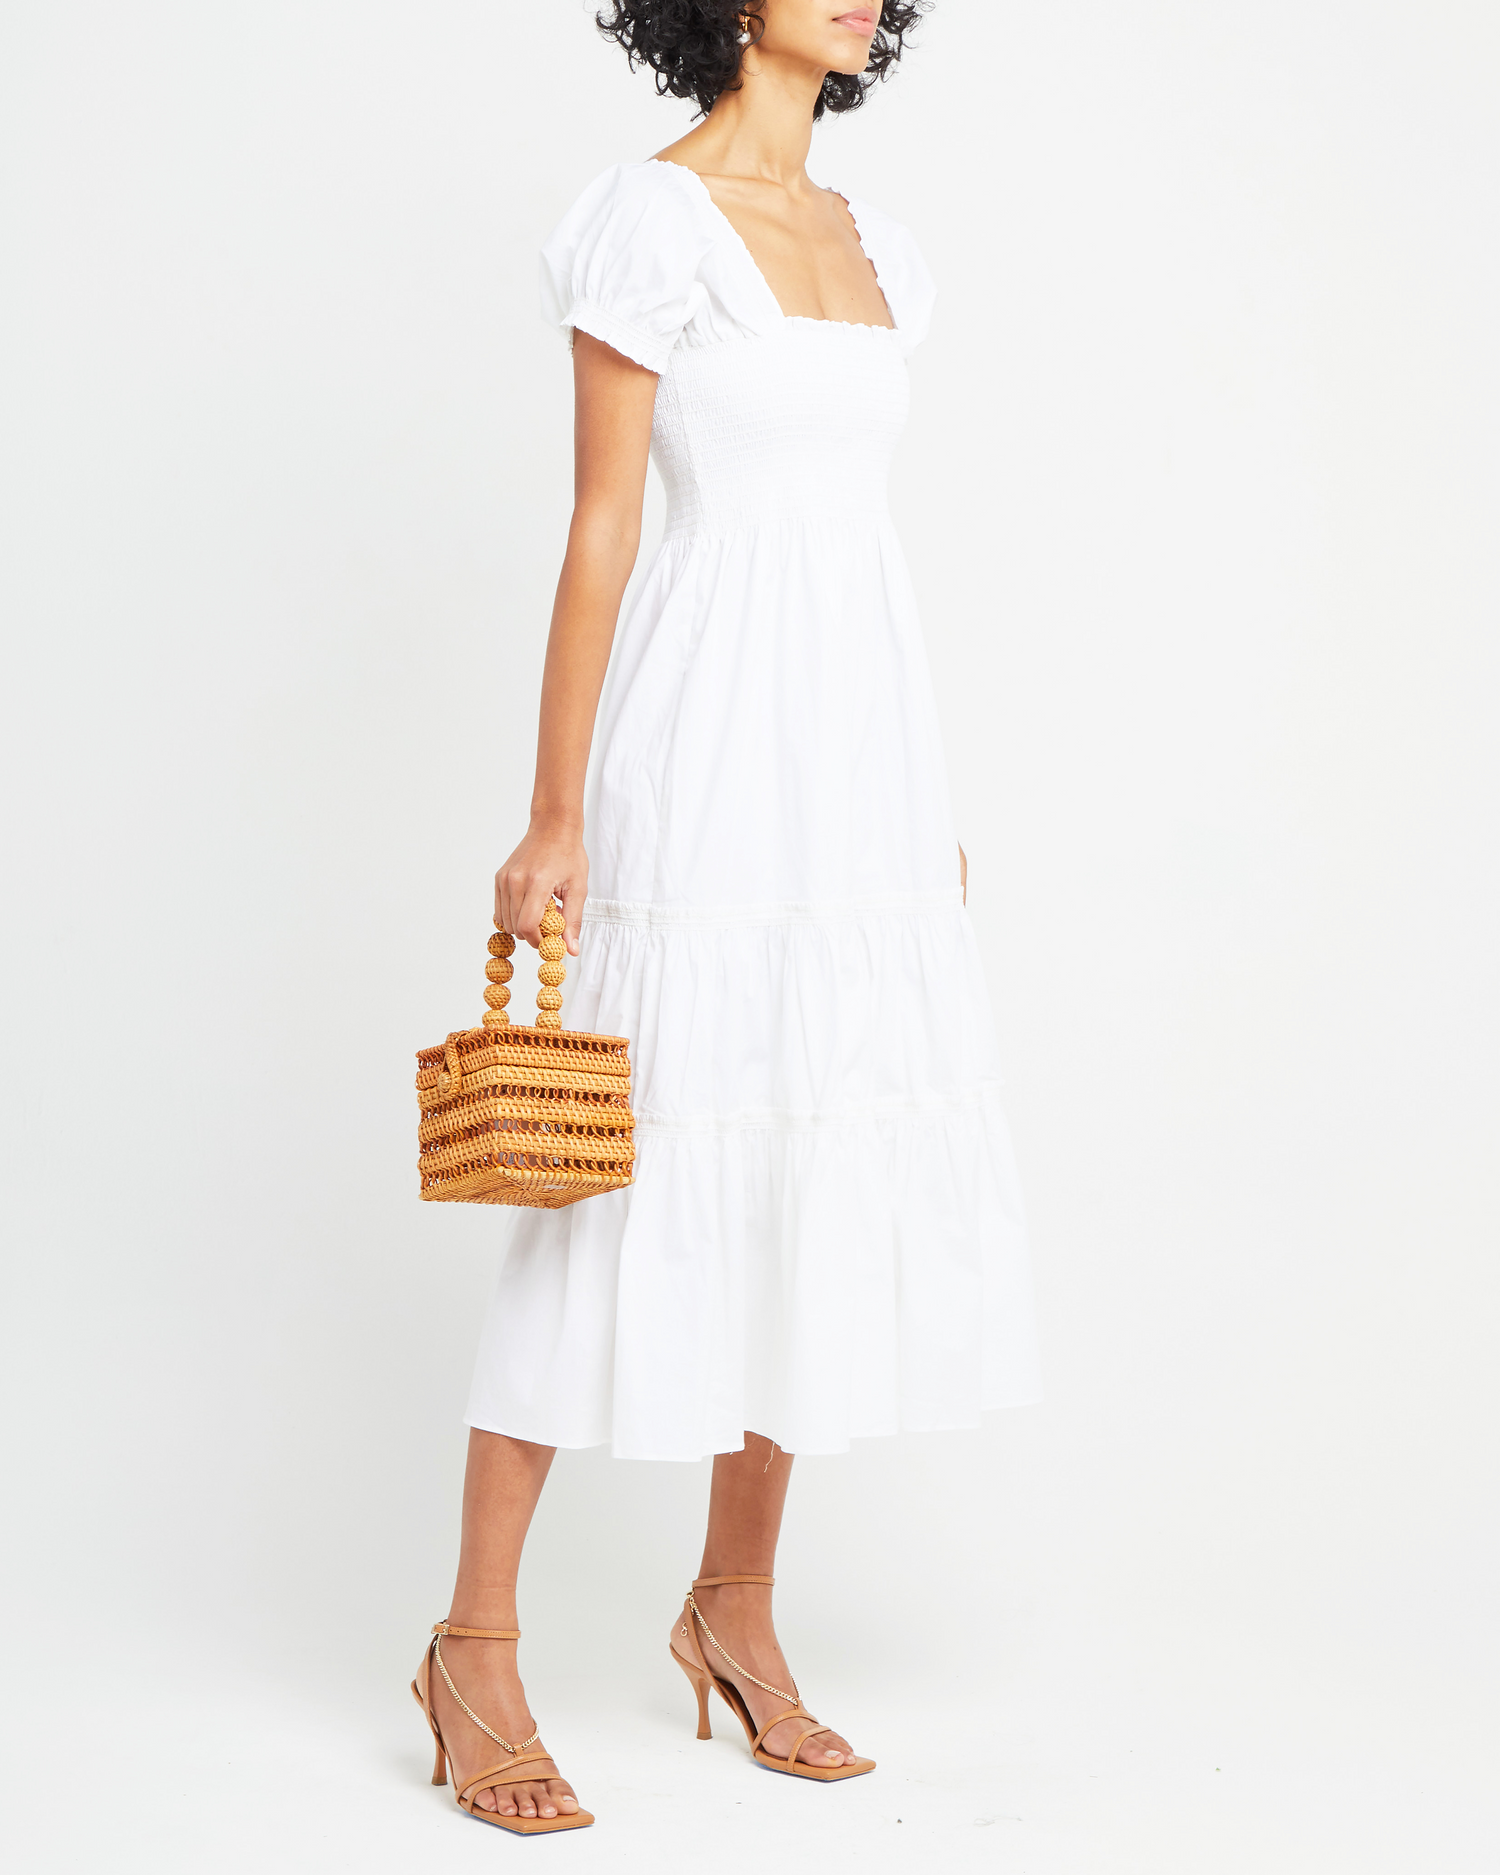 Sixth image of Square Neck Smocked Maxi Dress, a white maxi dress, smocked, puff sleeves, short sleeves